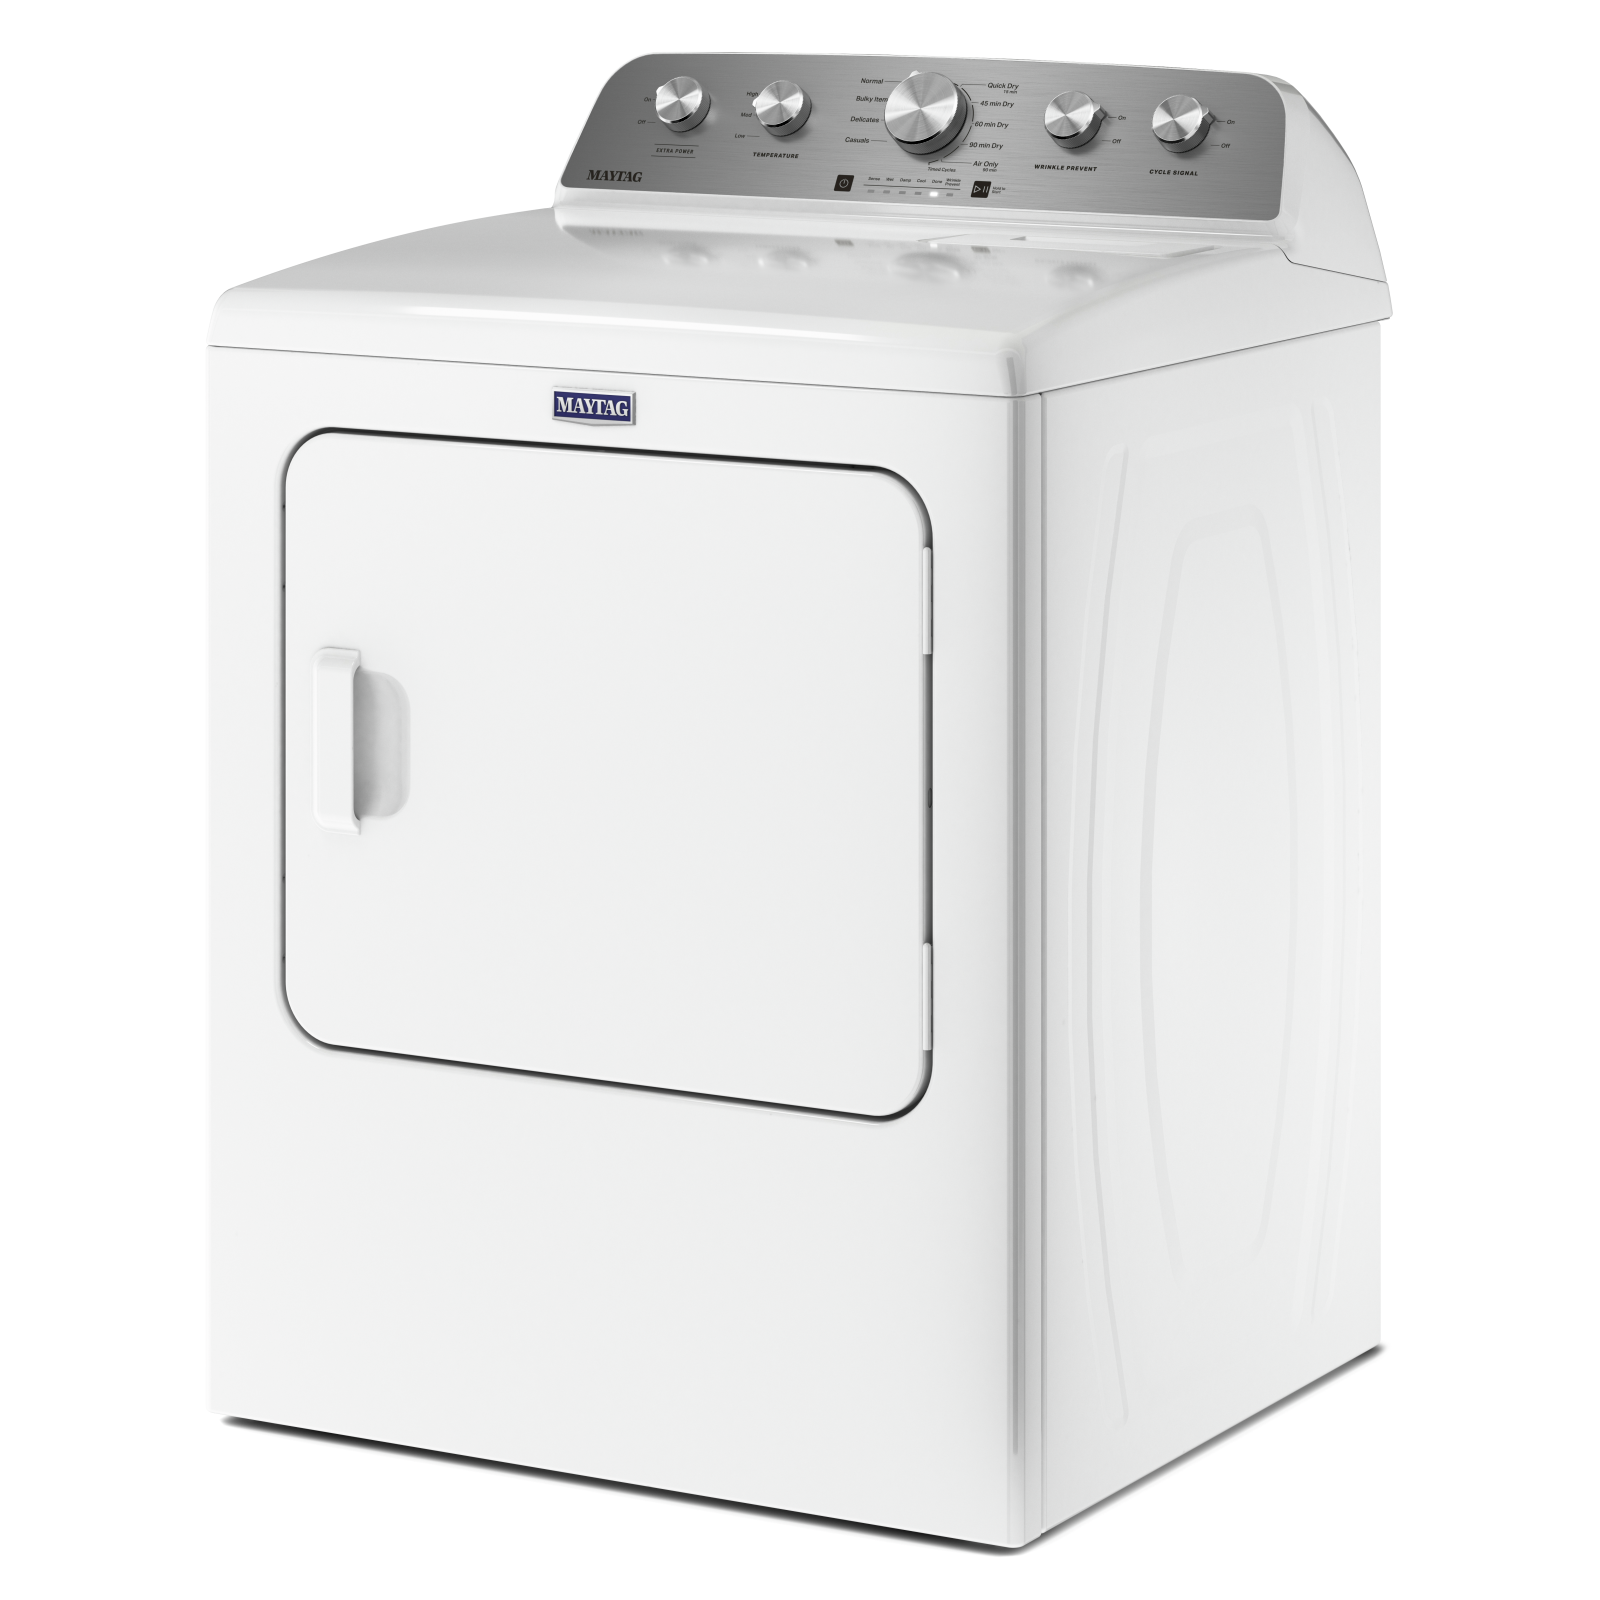 Maytag - 7 cu. Ft  Gas Dryer in White - MGD5030MW